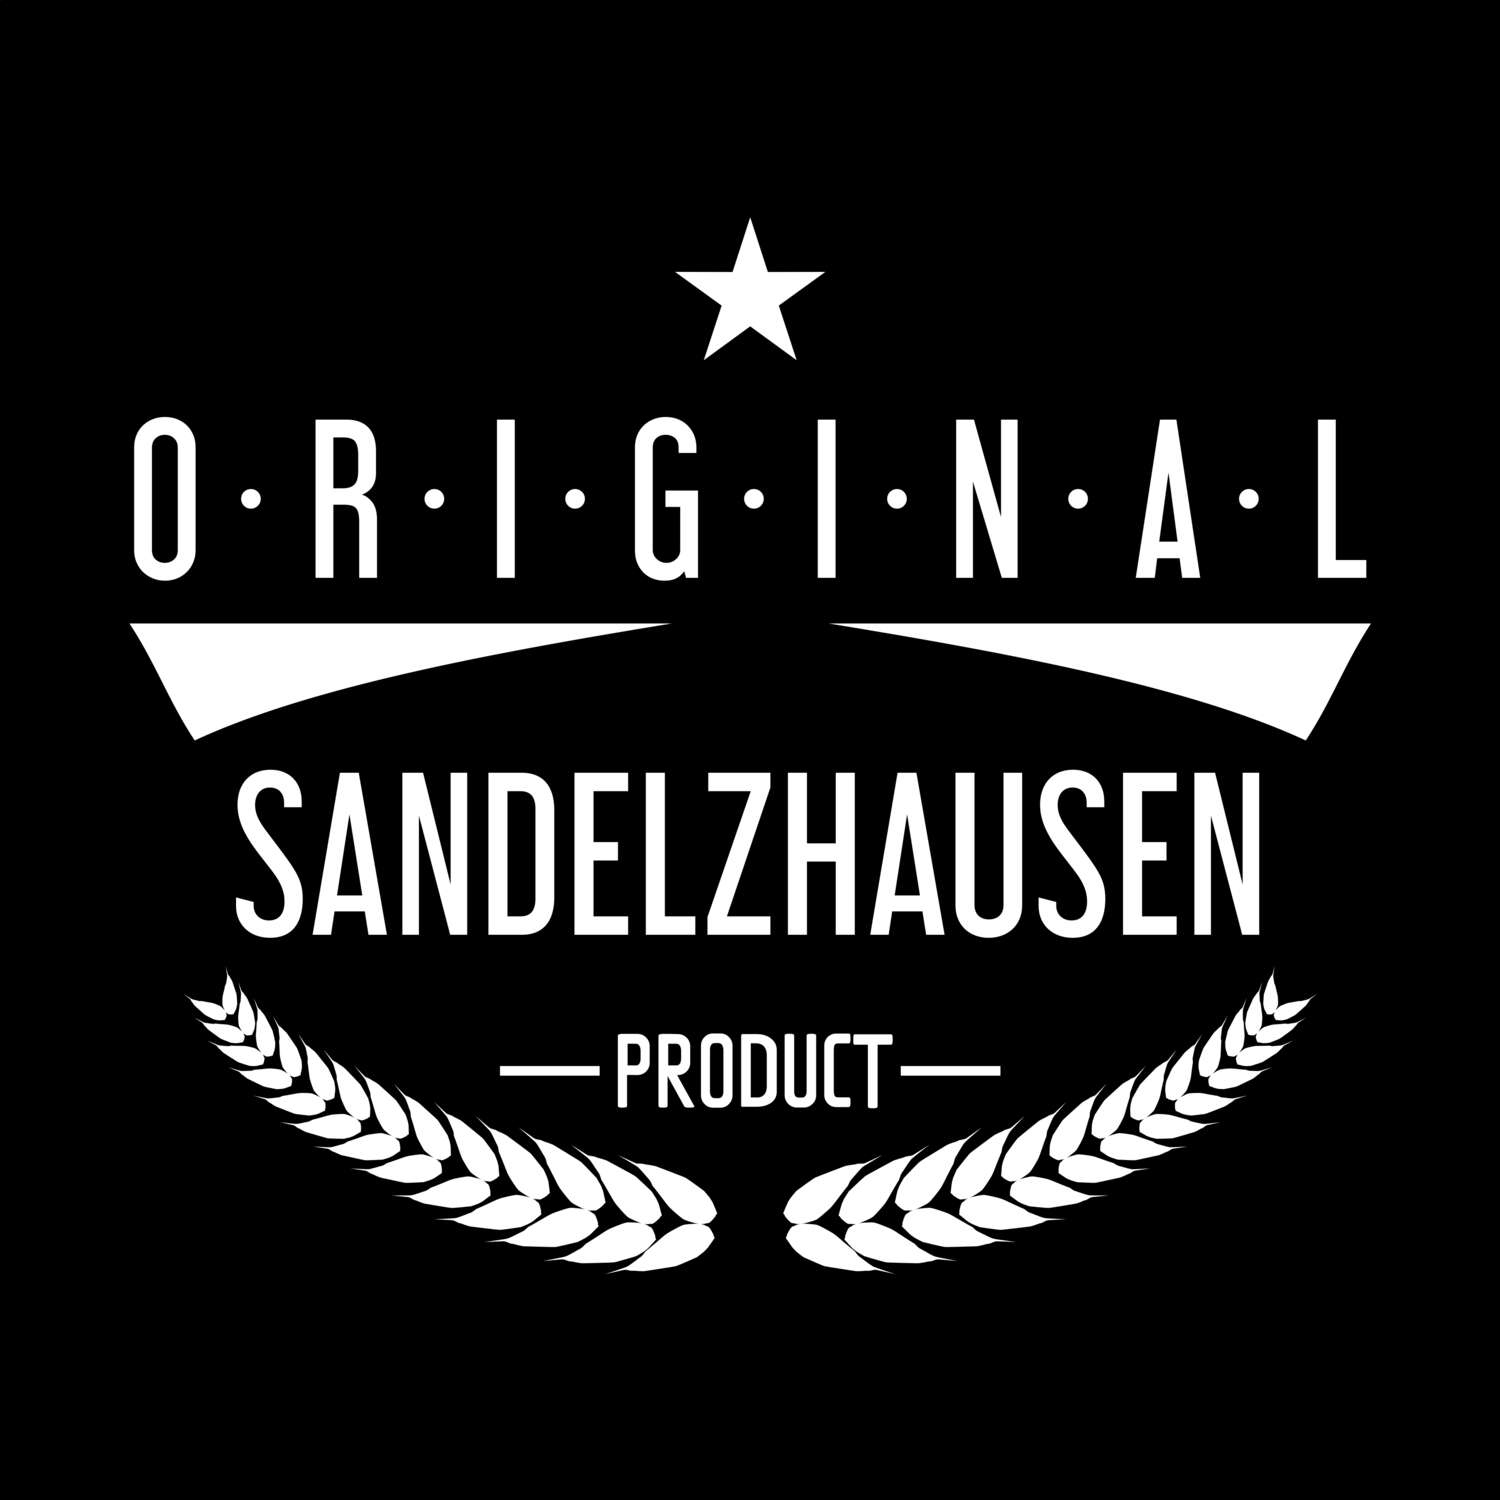 Sandelzhausen T-Shirt »Original Product«